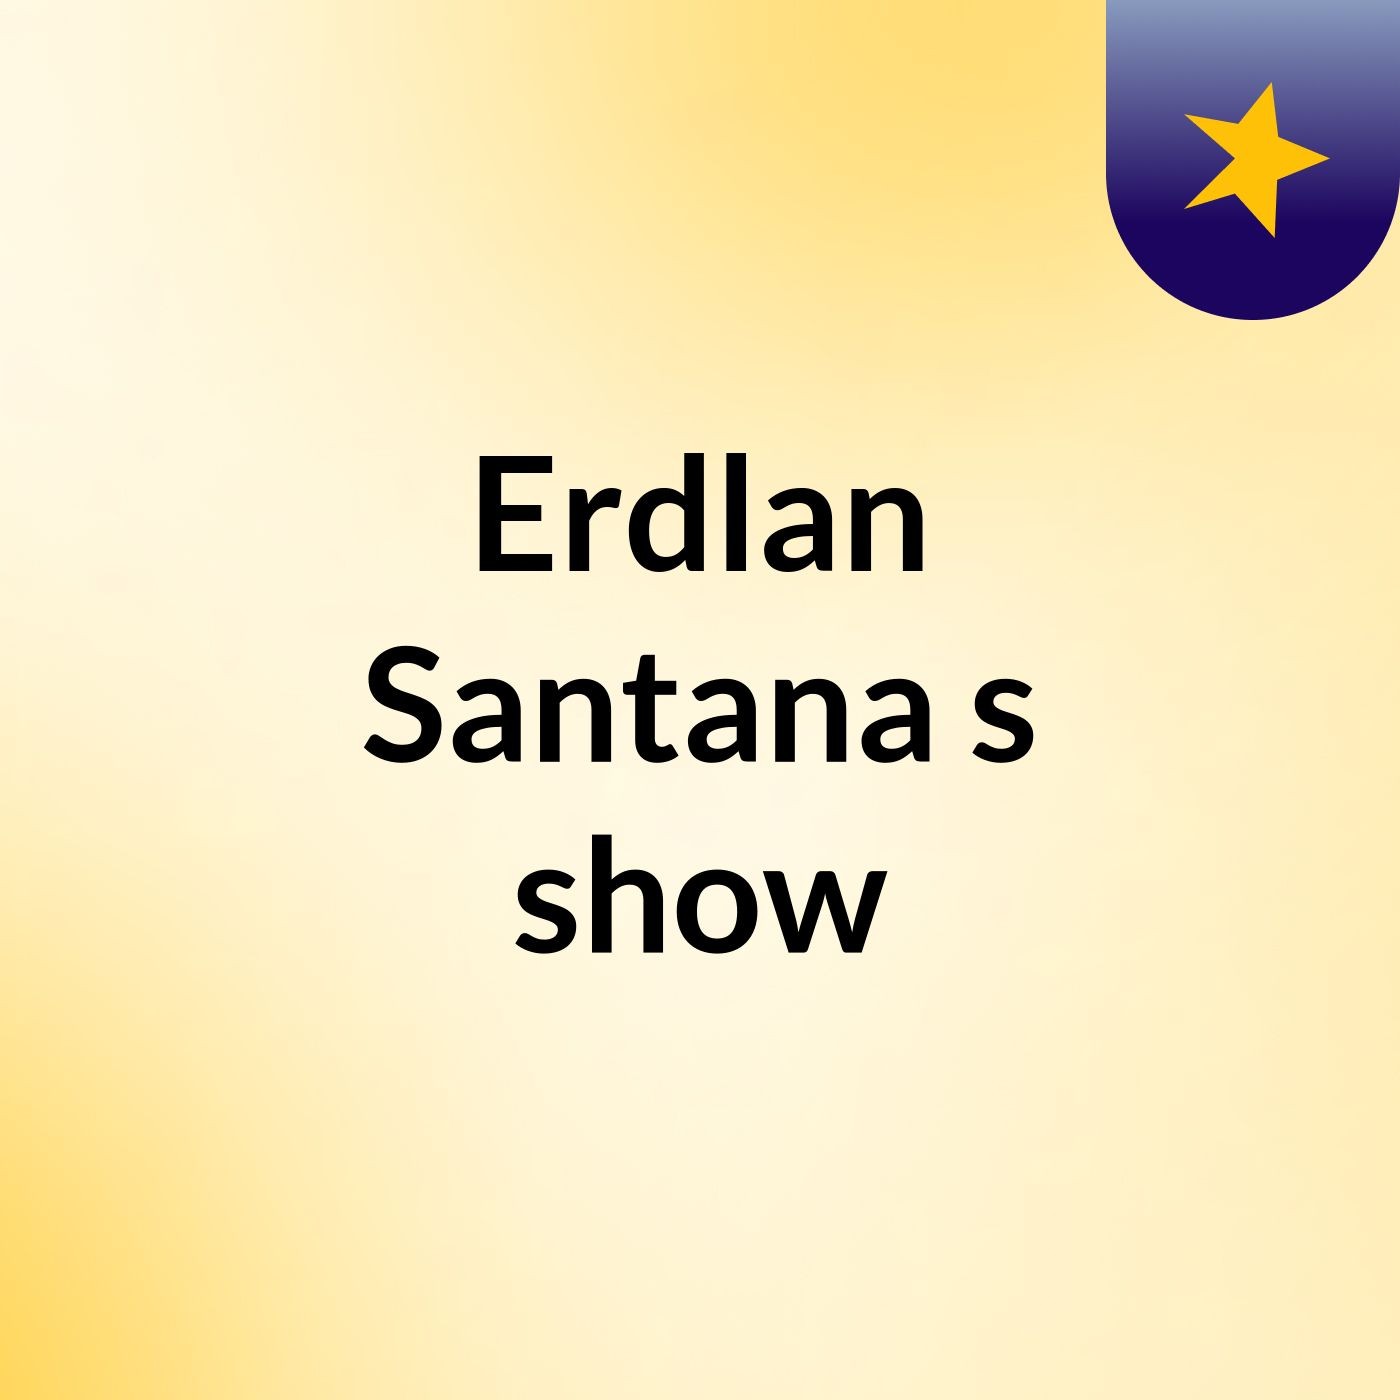 Erdlan Santana's show